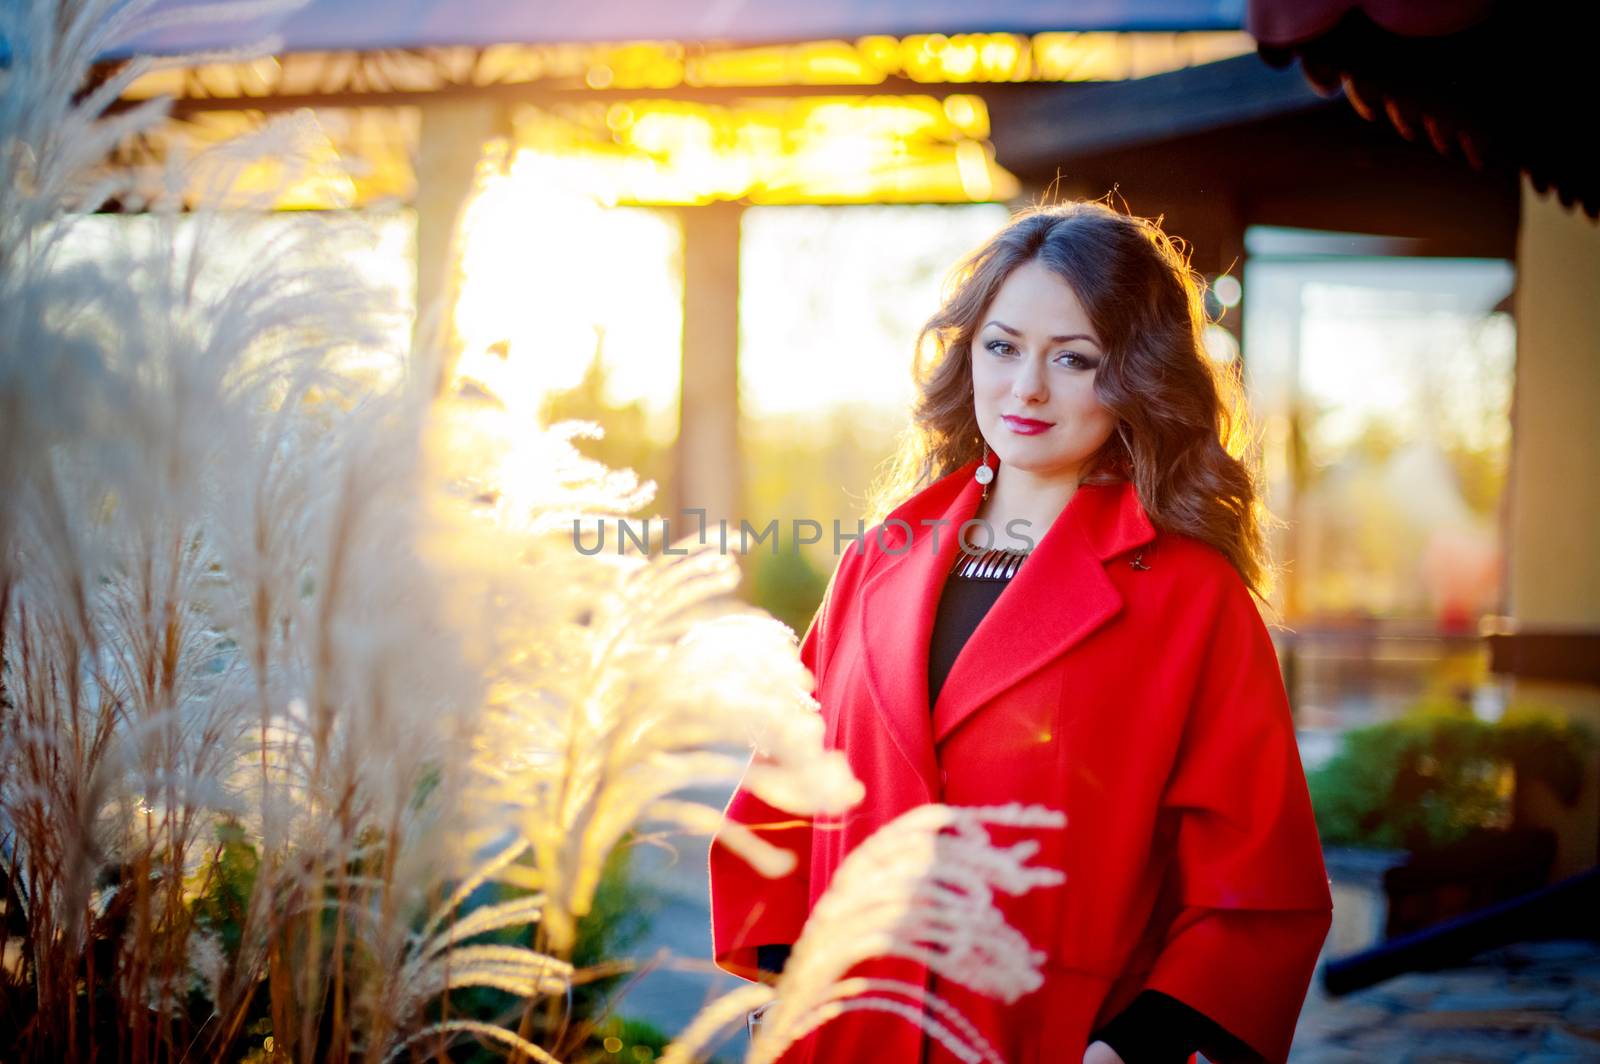 Beautiful elegant woman in a red coat